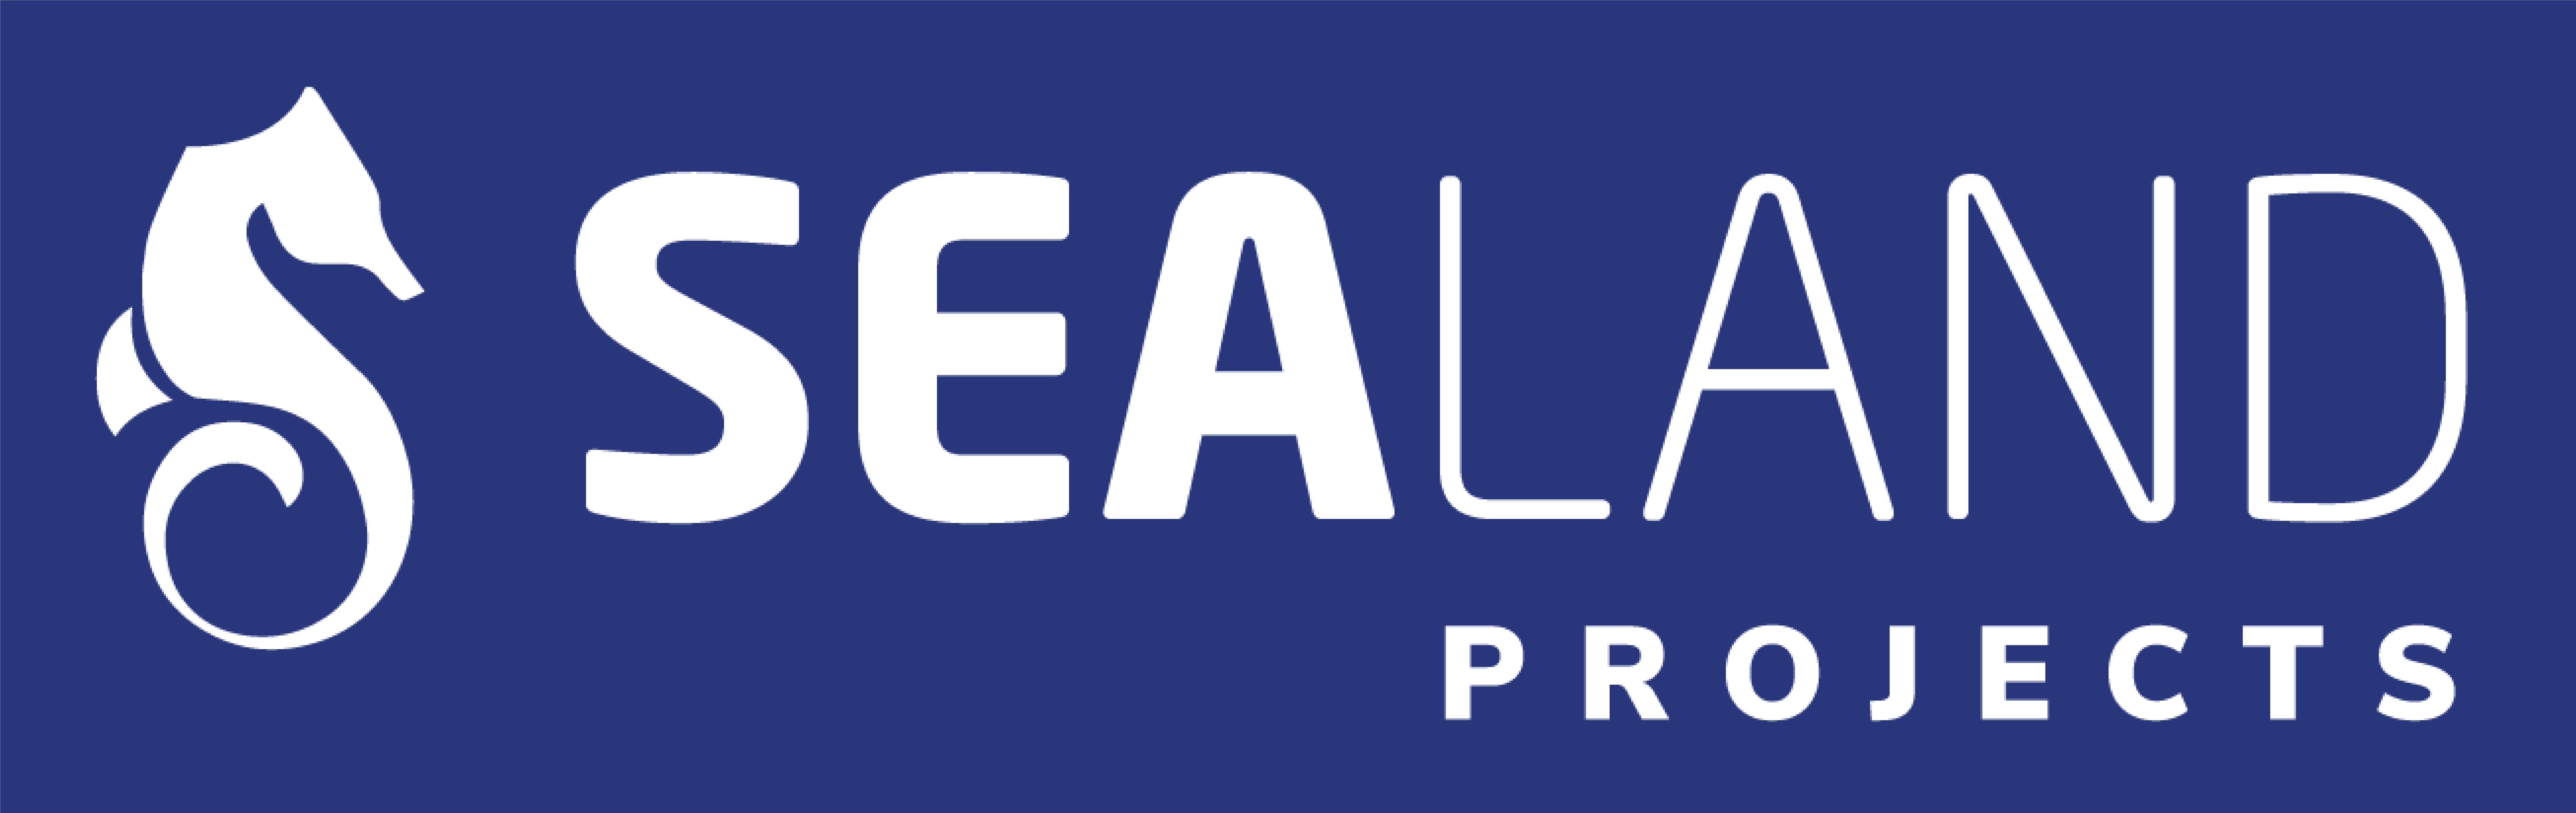 sealand logo